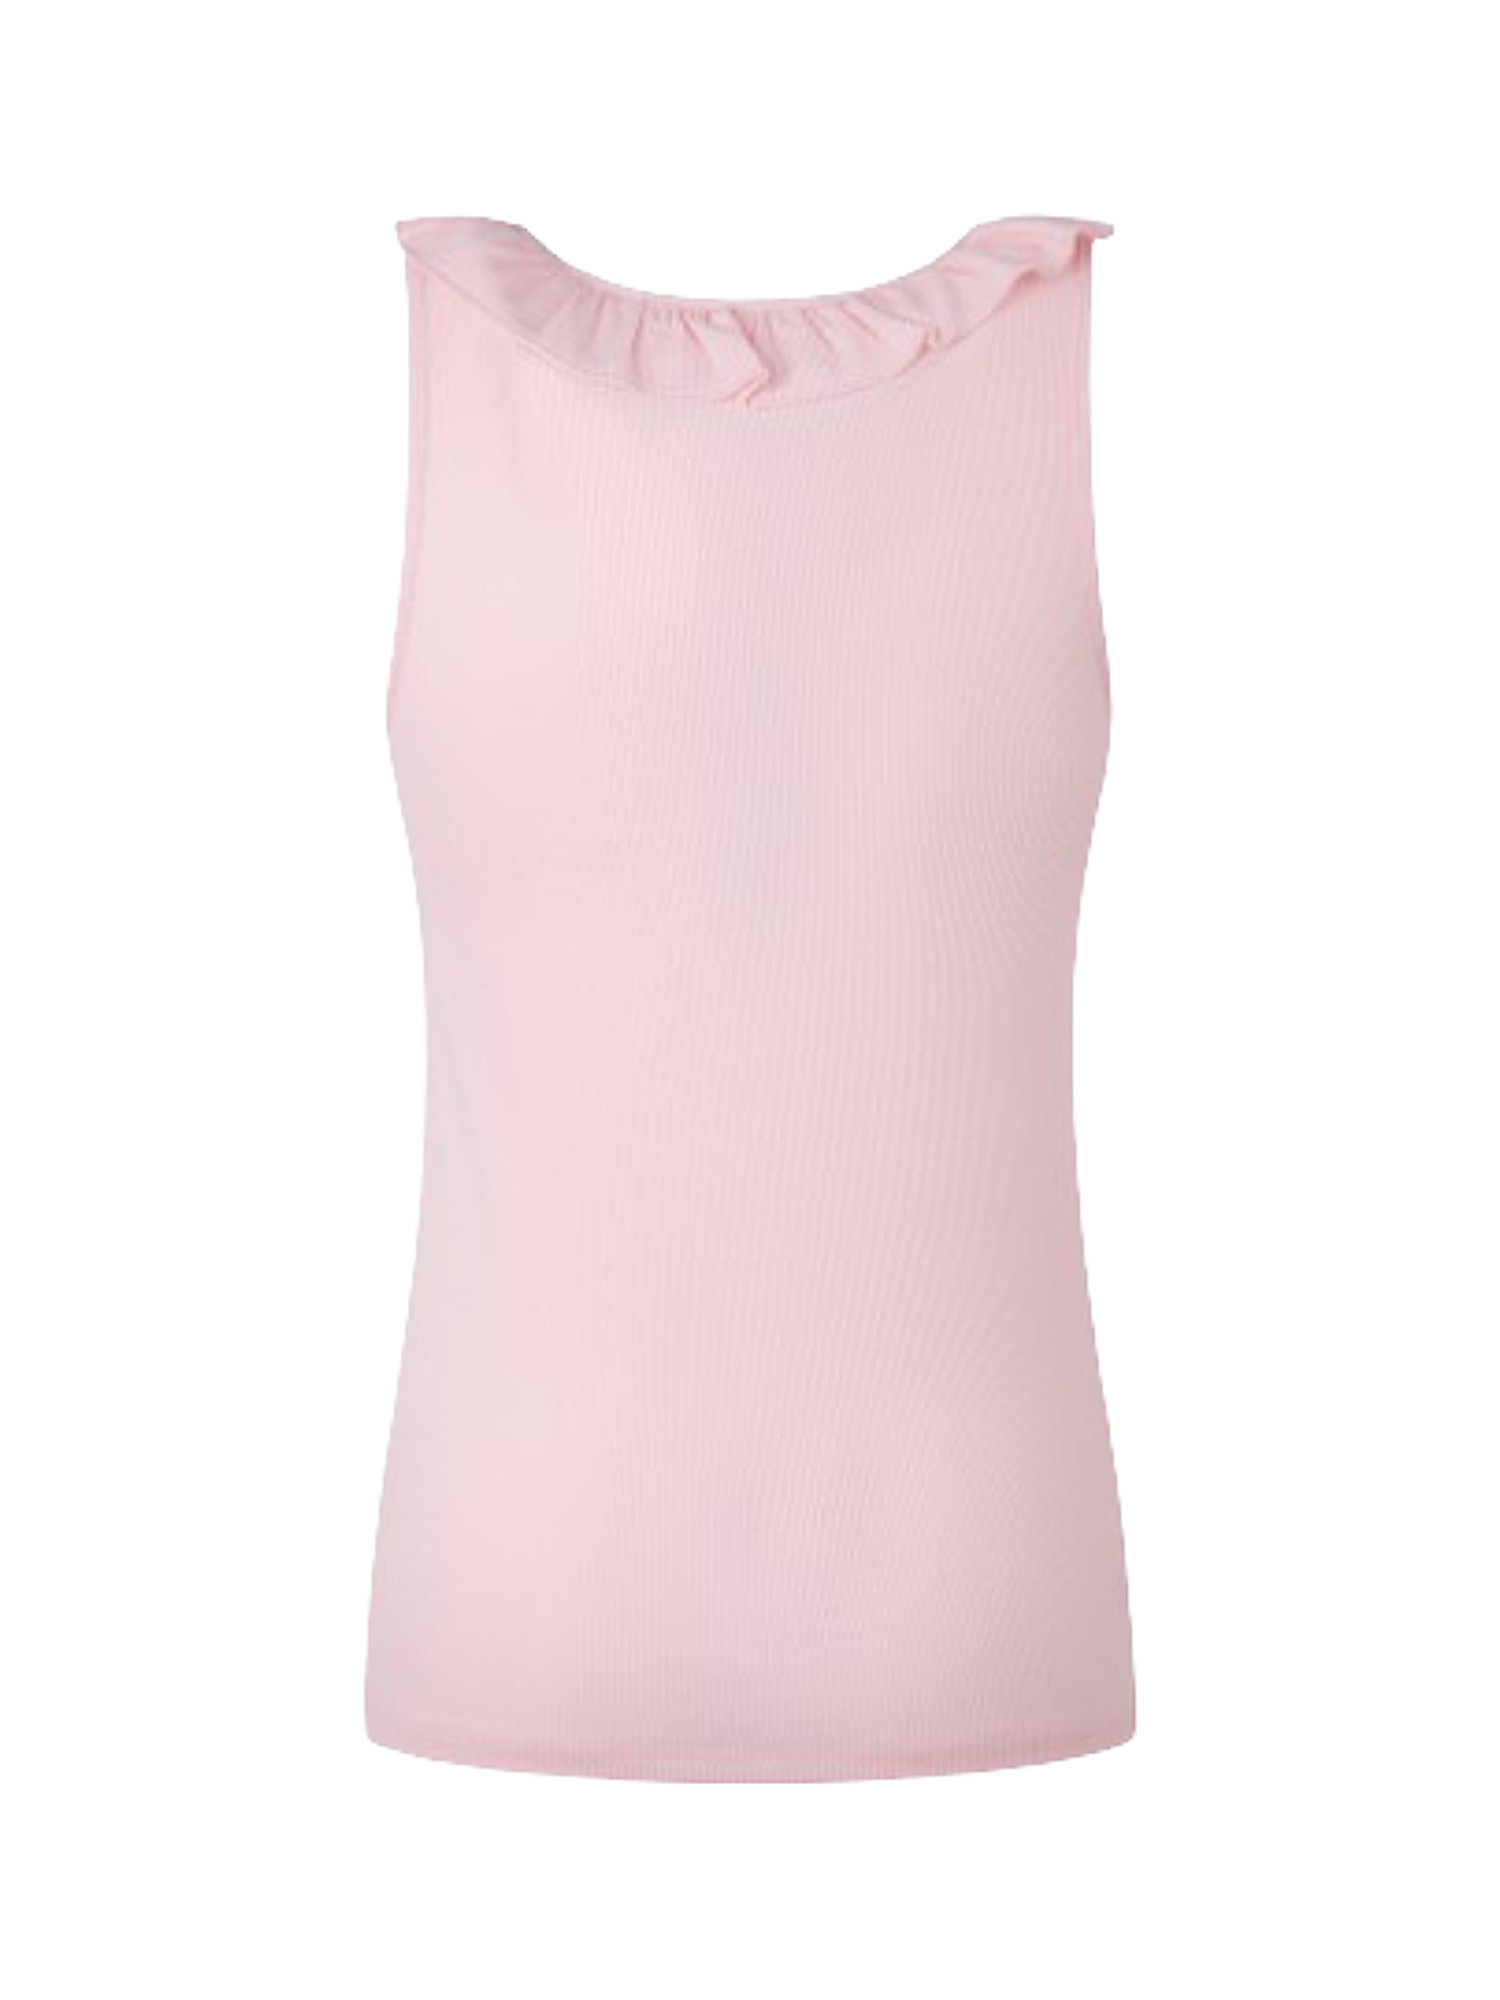 Dorina n flounce neck top, Light Pink, large image number 1